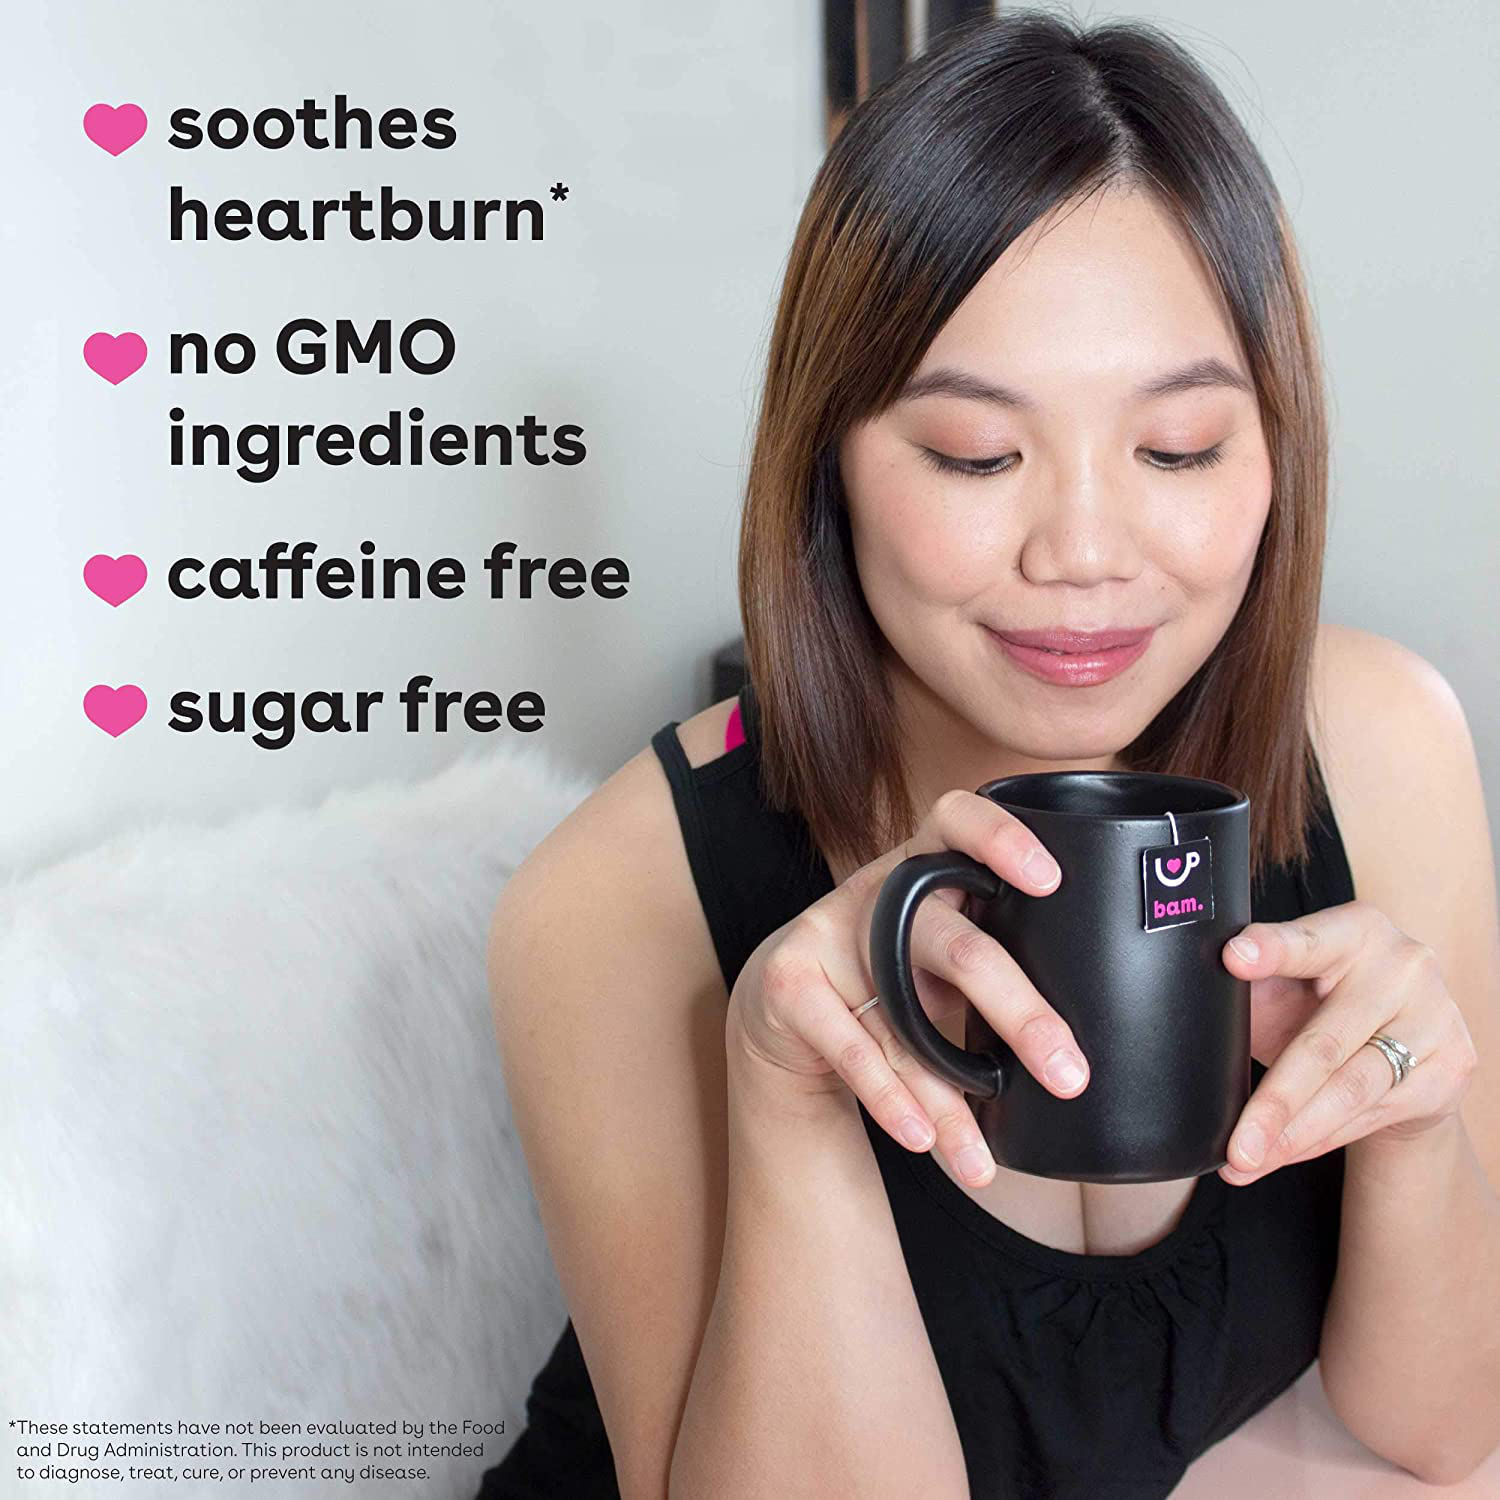 Bamboobies Women's Pregnancy Herbal Tea for Nursing Support, Sweet Peach, Boosts Milk Production, Organic, Non GMO, Caffeine Free, and Sugar Free, 20 Tea Bags